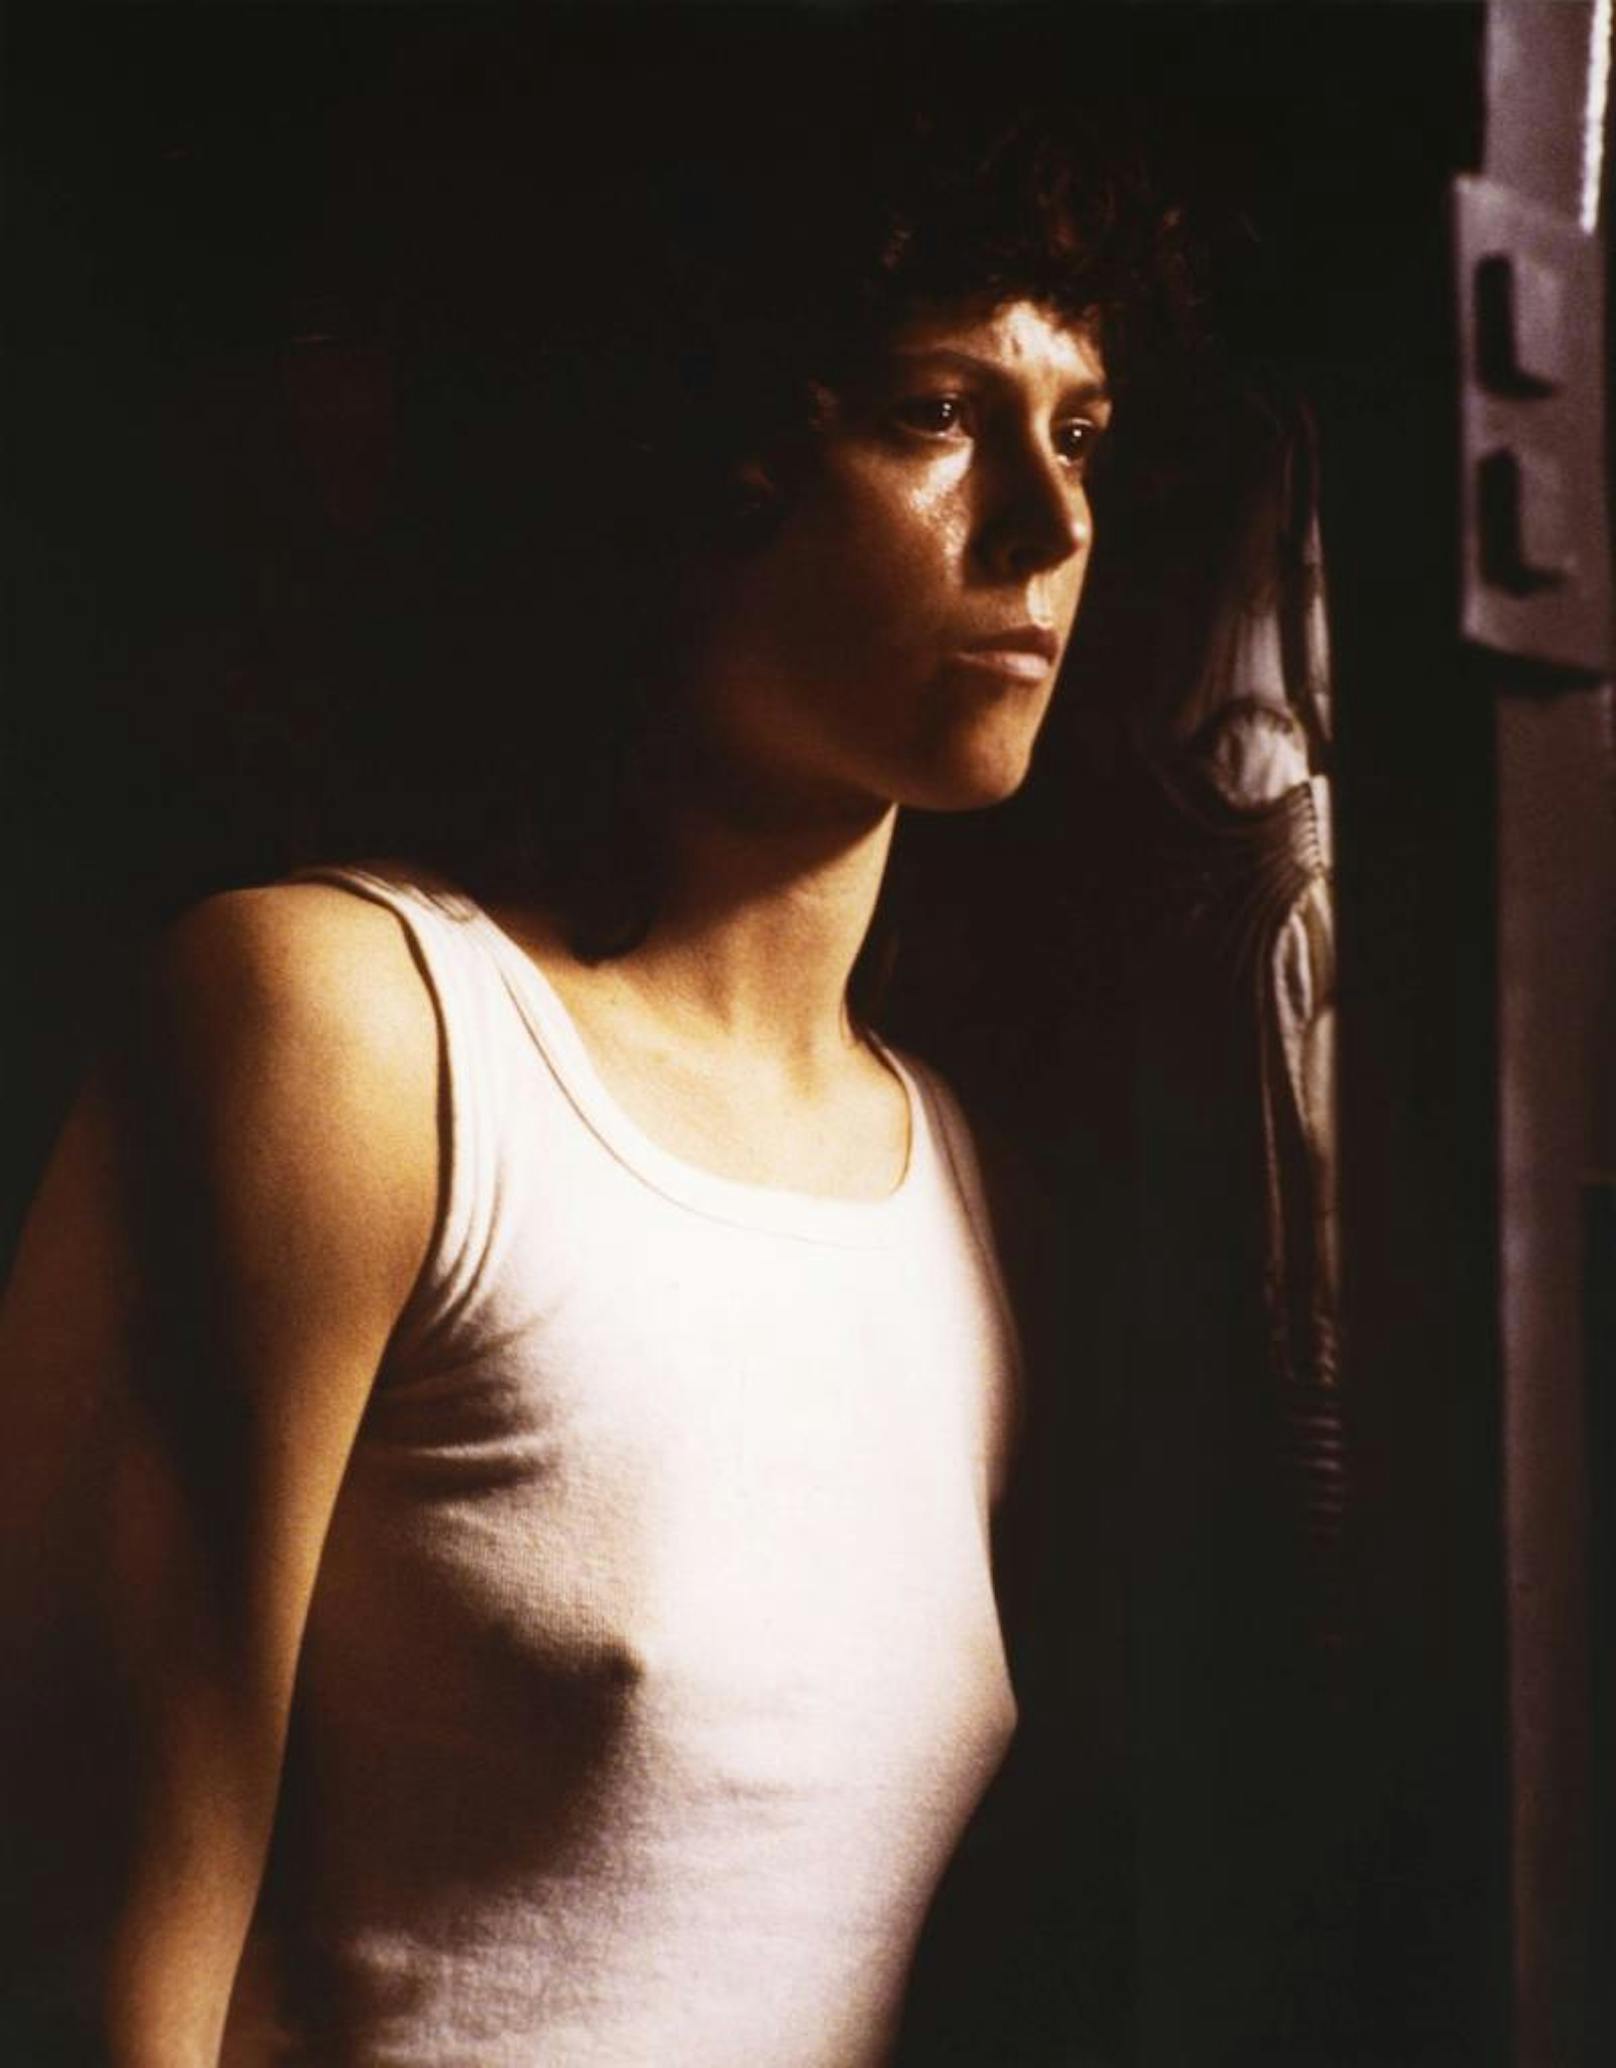 Sigourney Weaver in "Alien" (1979)